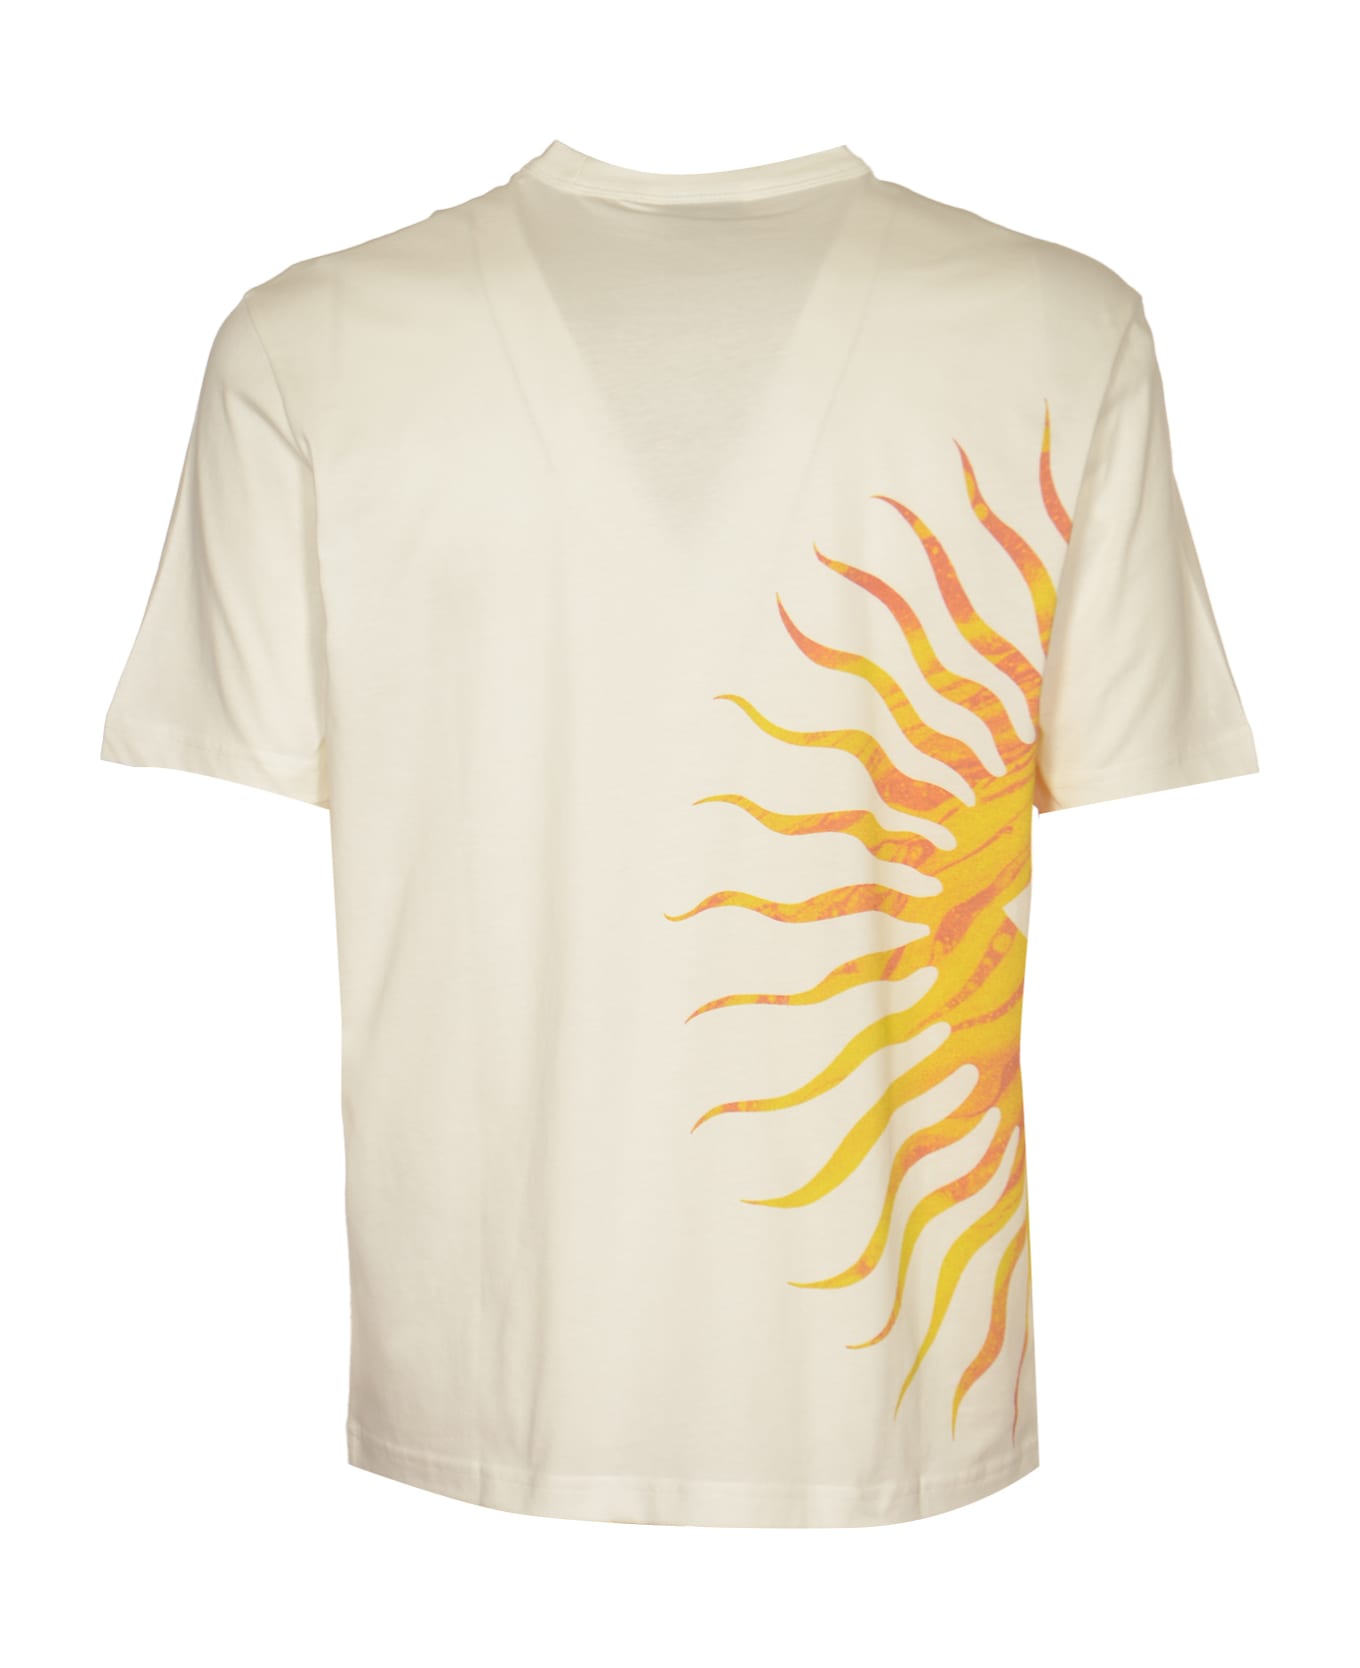 Paul Smith Sunnyside T-shirt - Beige